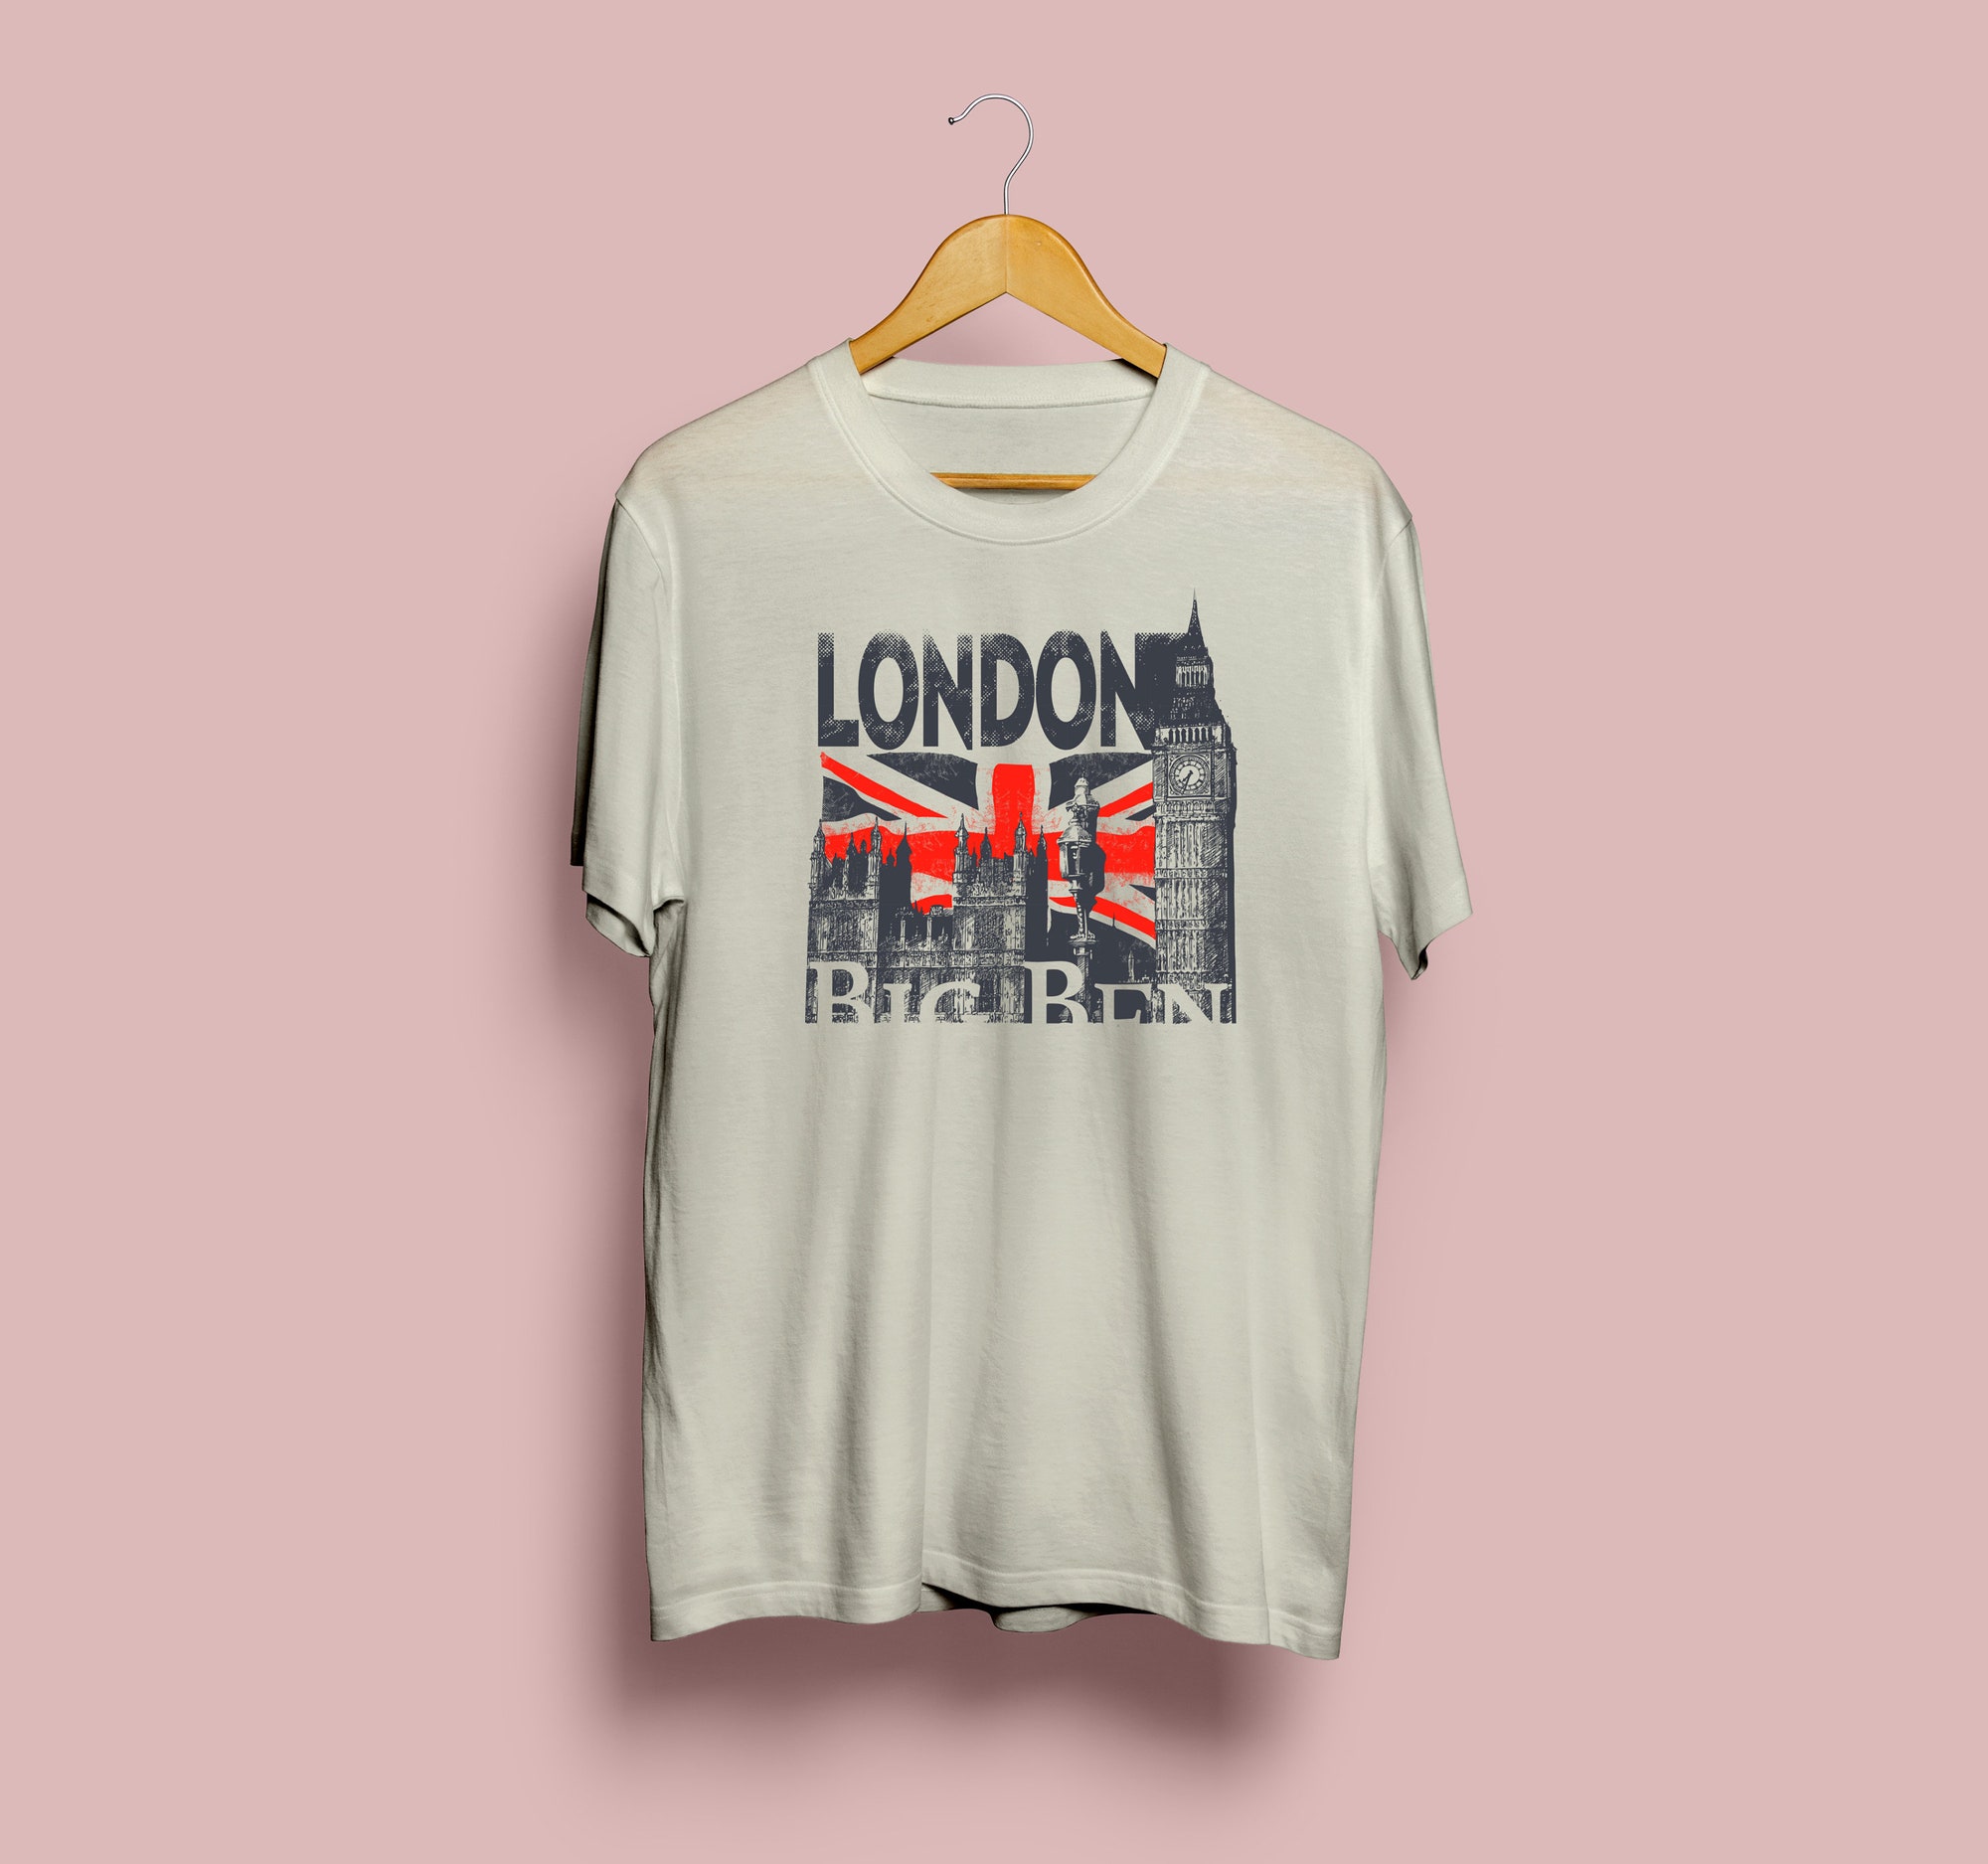 Discover London Shirt, London T-Shirt, England London Shirt